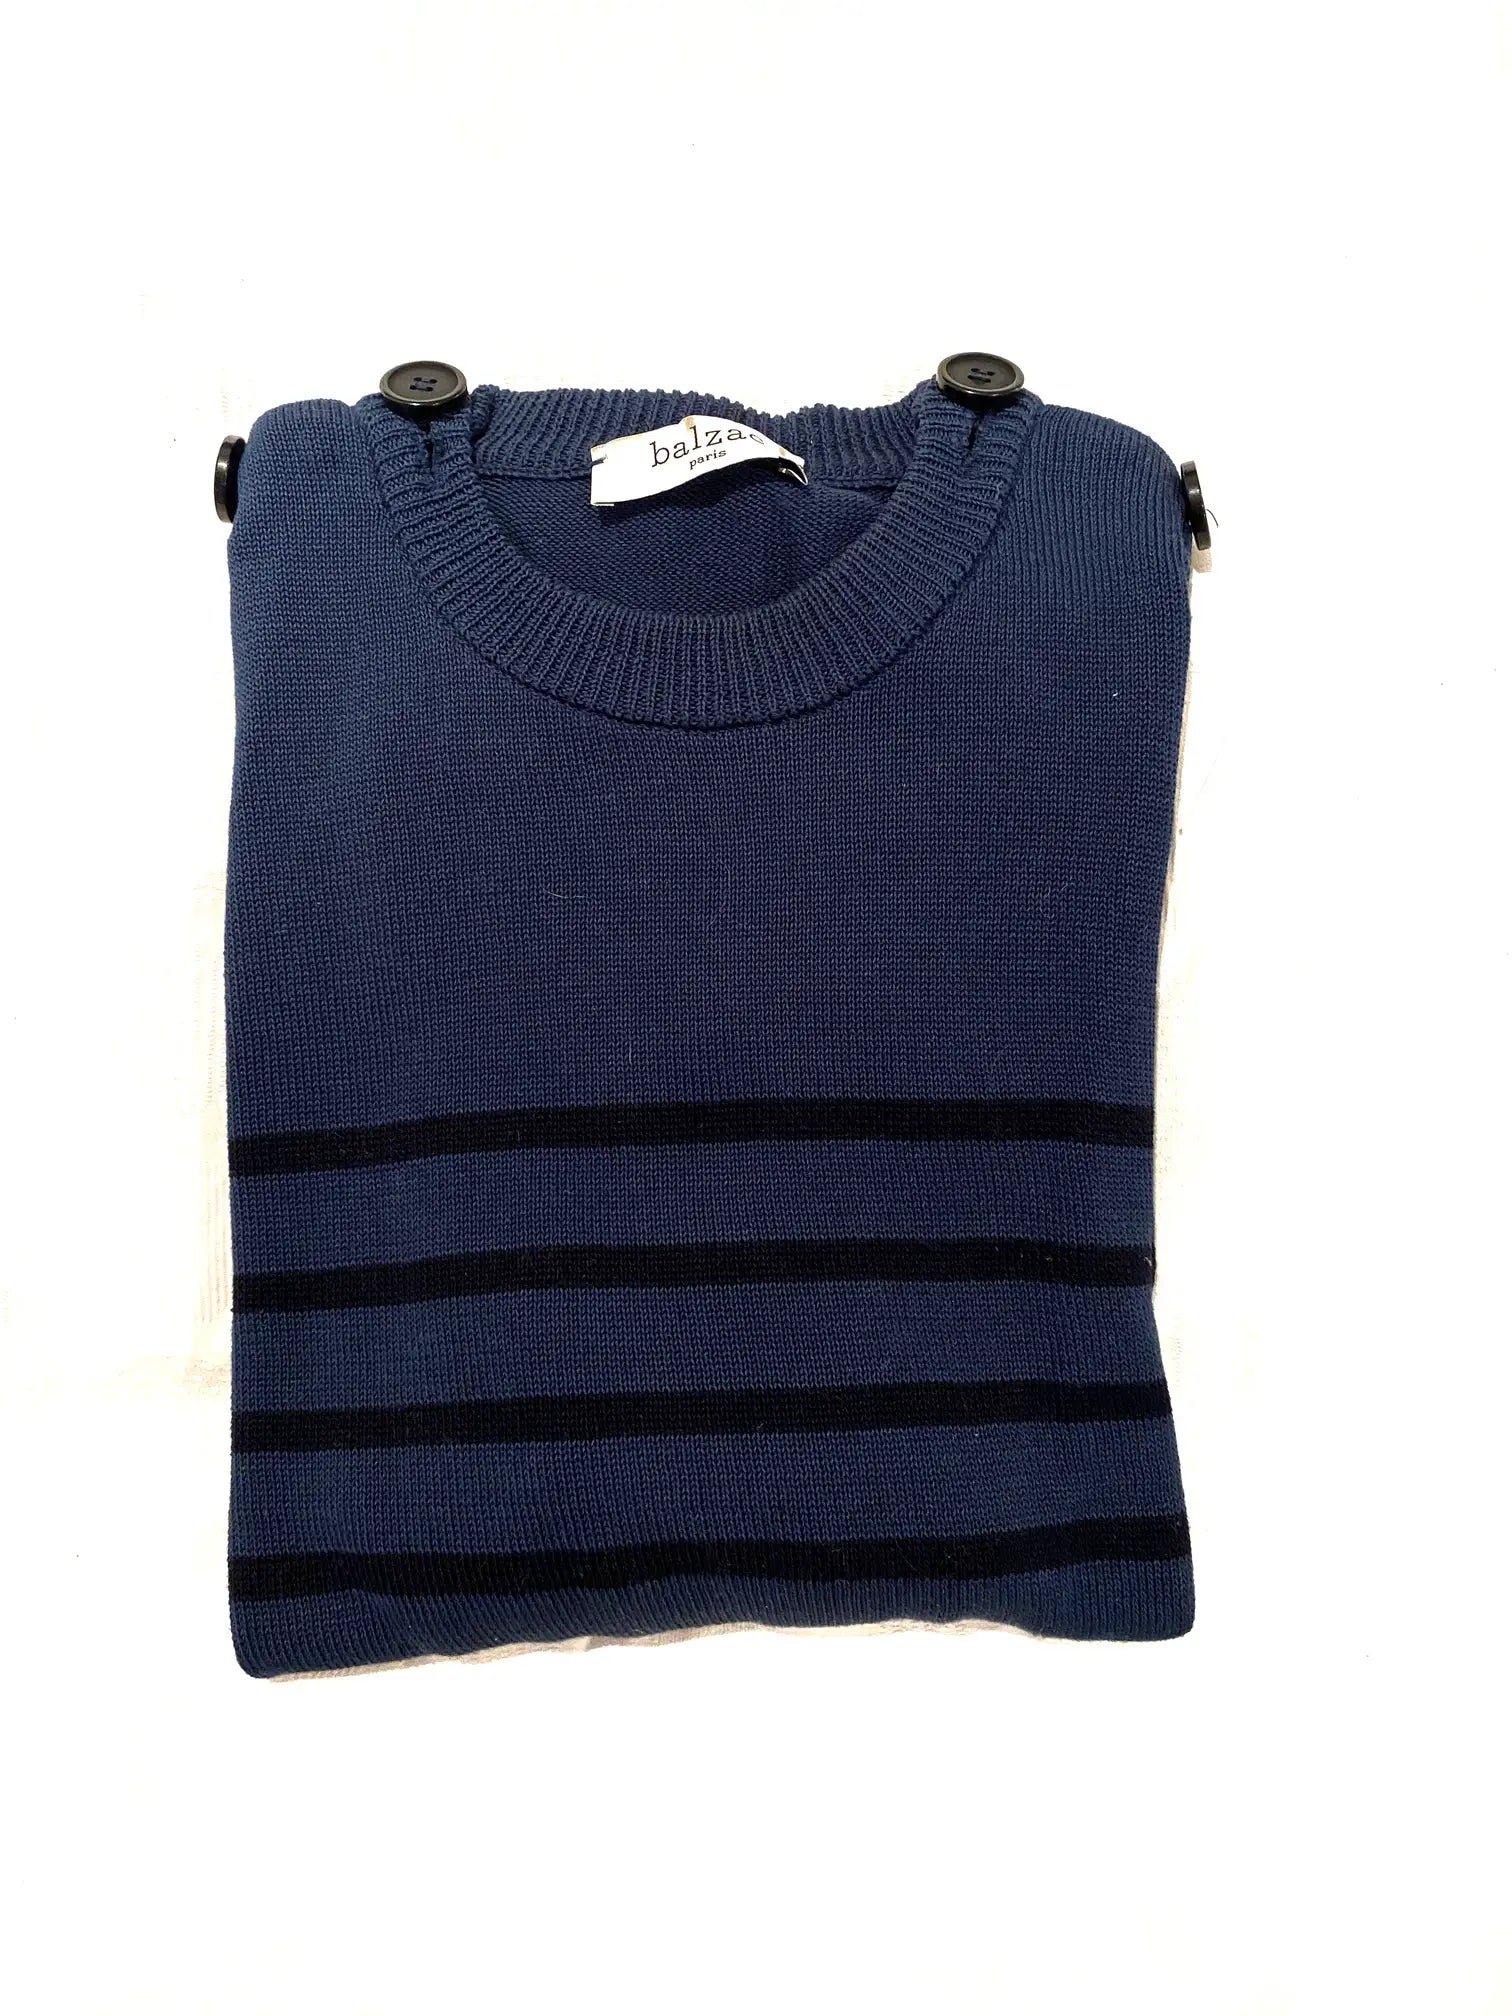 balzac paris sweater, petroleum blue, sailor style, with black stripes and black buttons